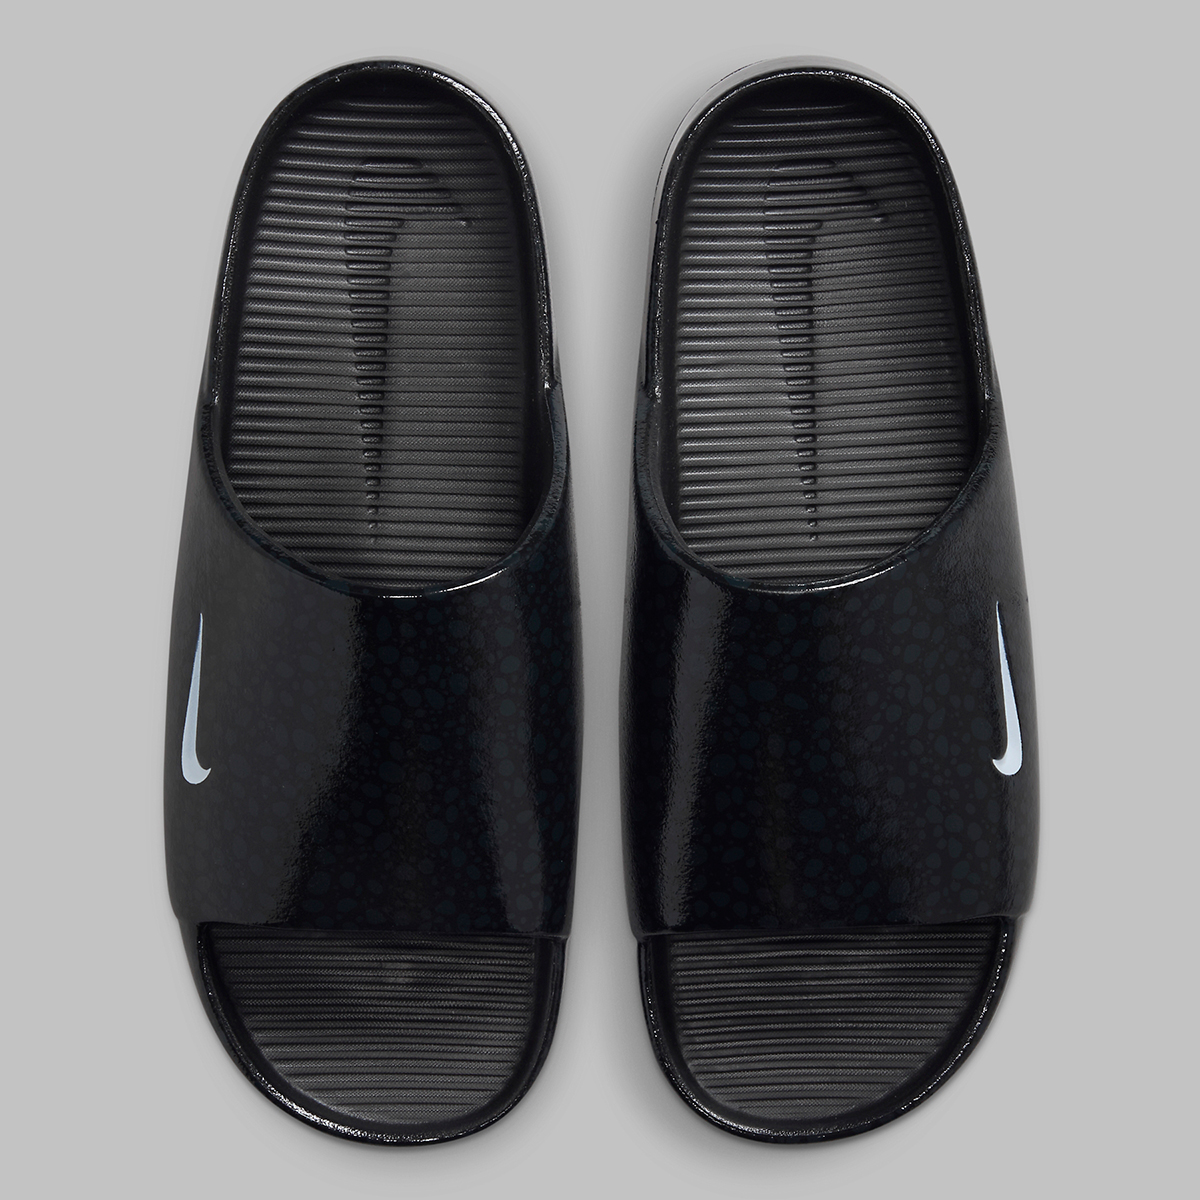 nike roshe cushioning sandals shoes amazon Safari Black Hm5072 001 5